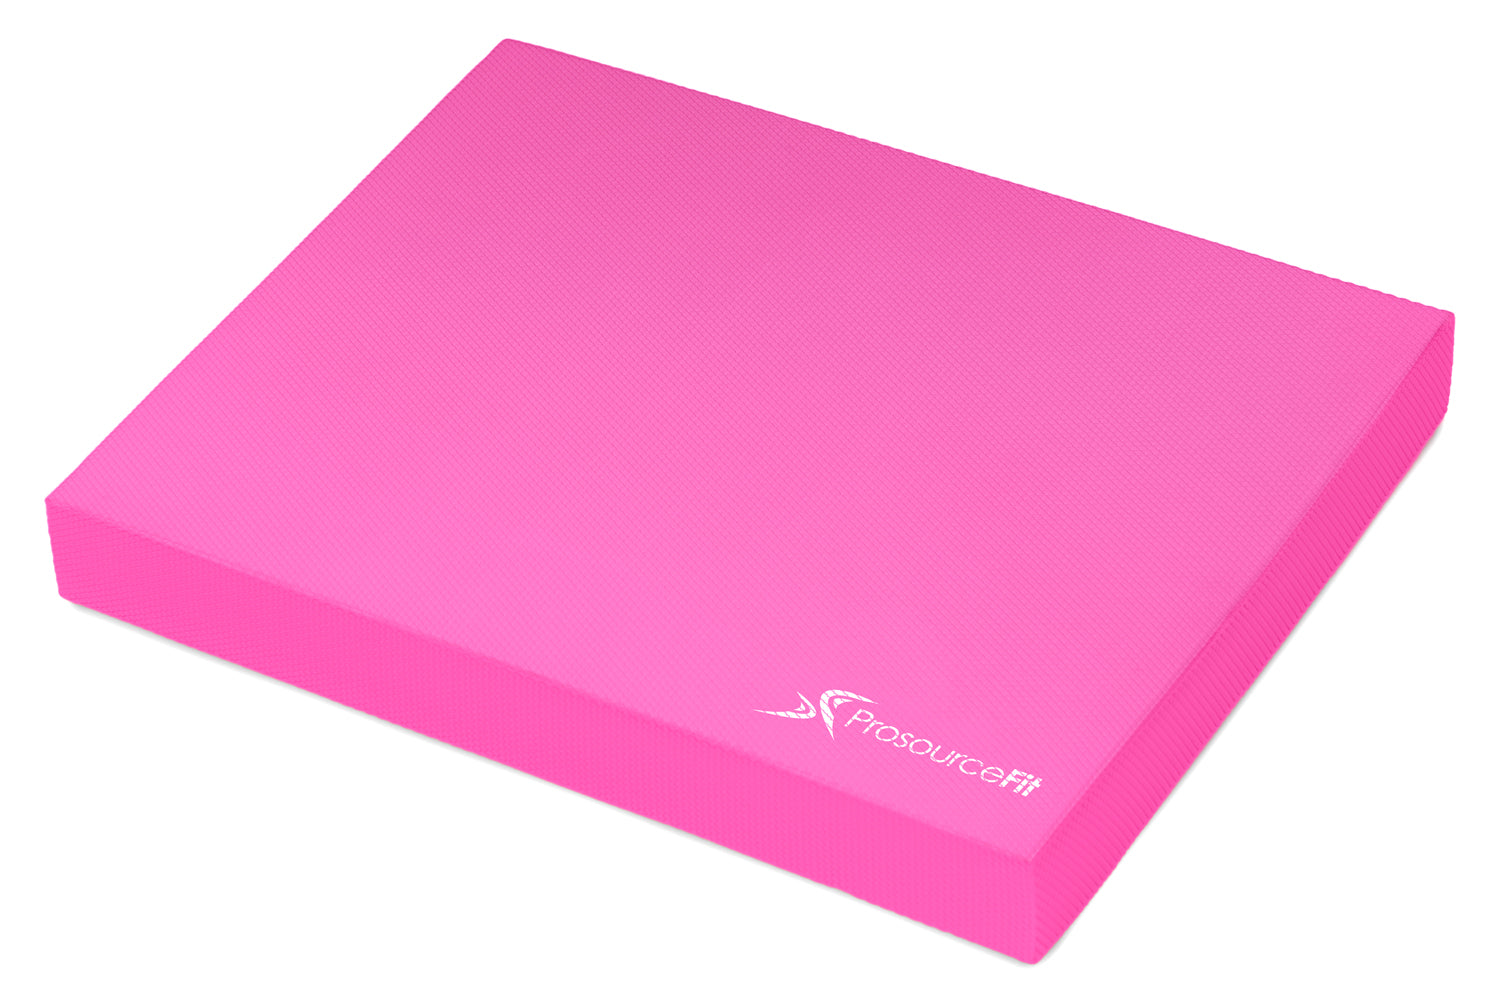 Pink Exercise Balance Pad - Large